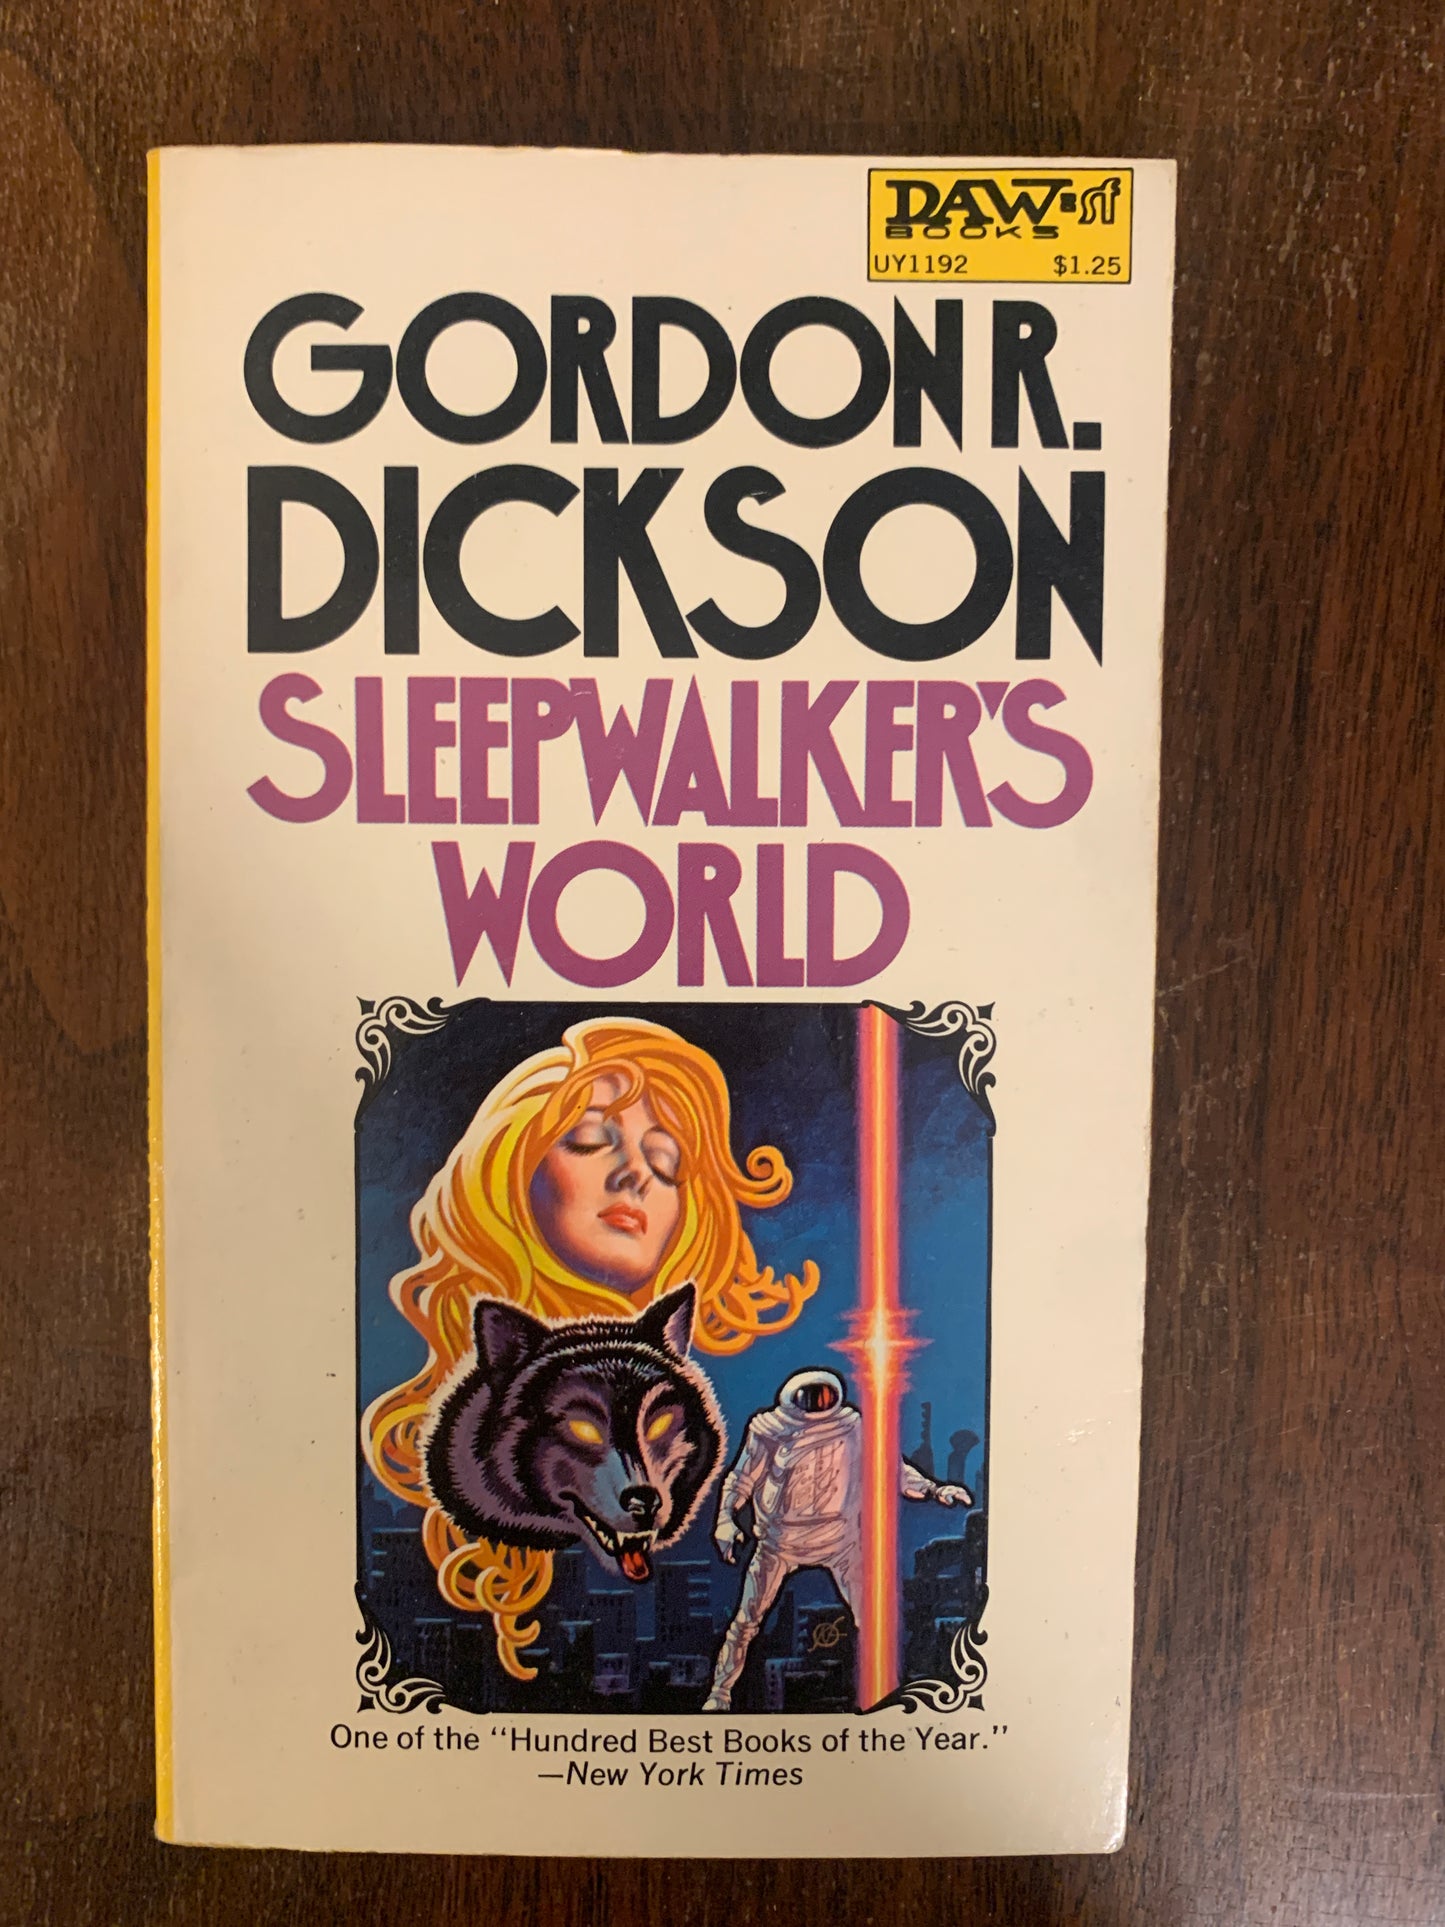 Gordon R. Dickson Lot of 6 Daw Books